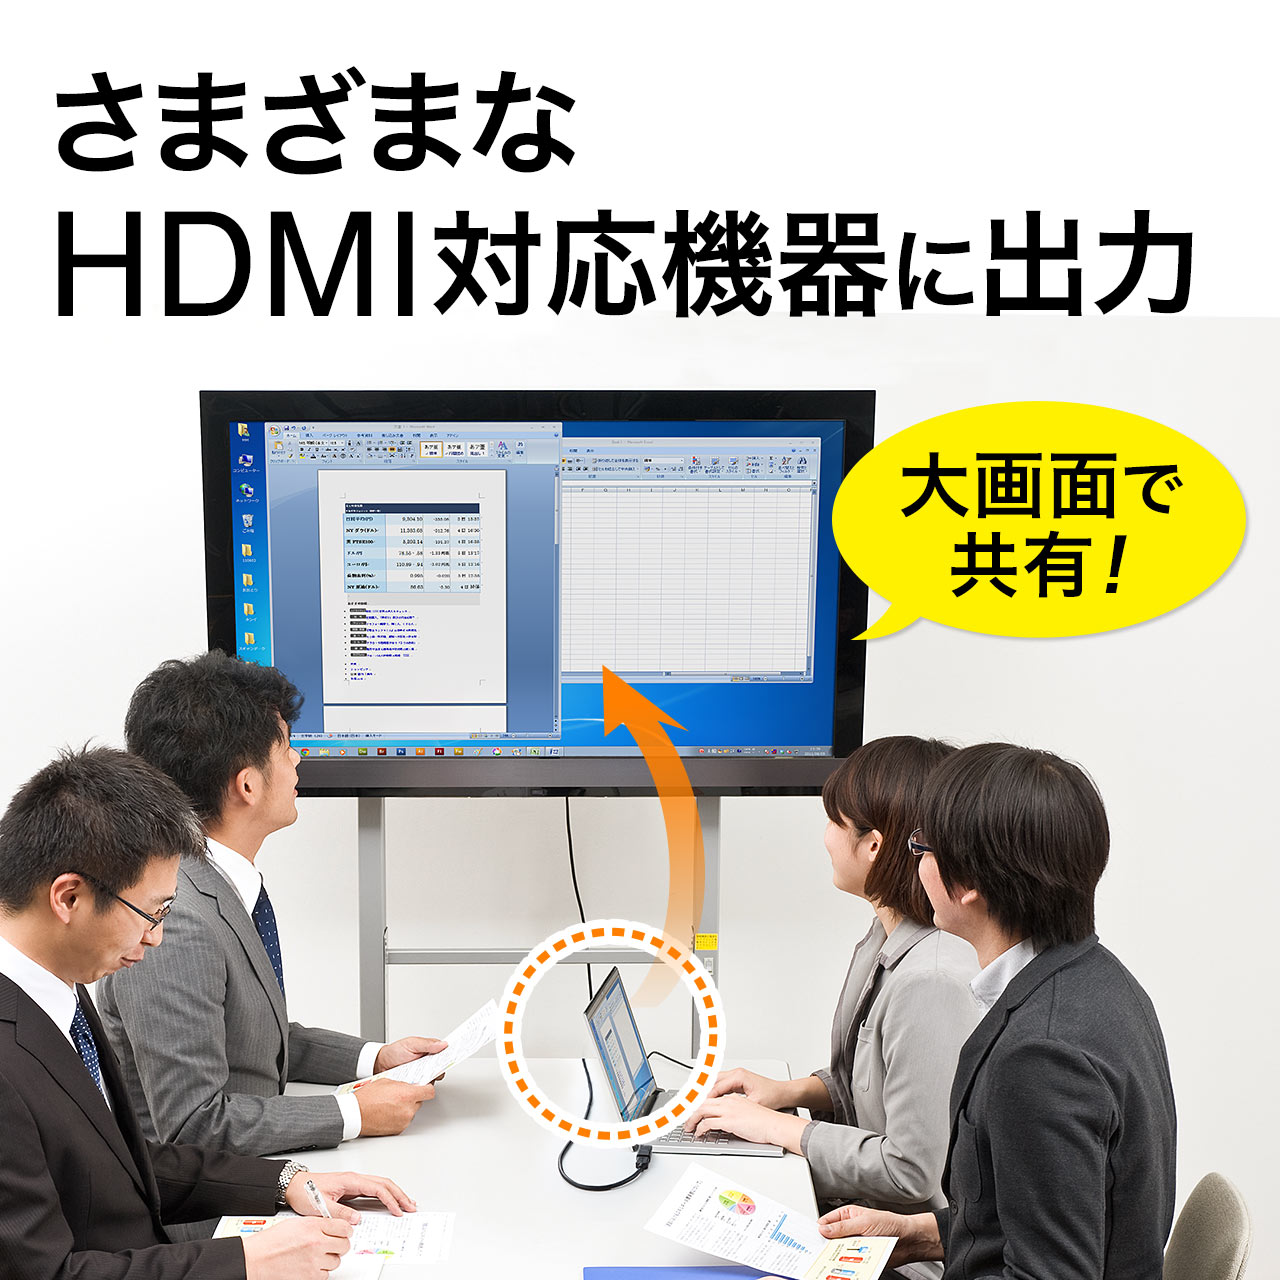 DisplayPort HDMIϊA_v^[(4K/60HzΉEANeBu^CvEfBXvC |[g HDMI ϊE4Ko͉\j 500-KC019DPPH